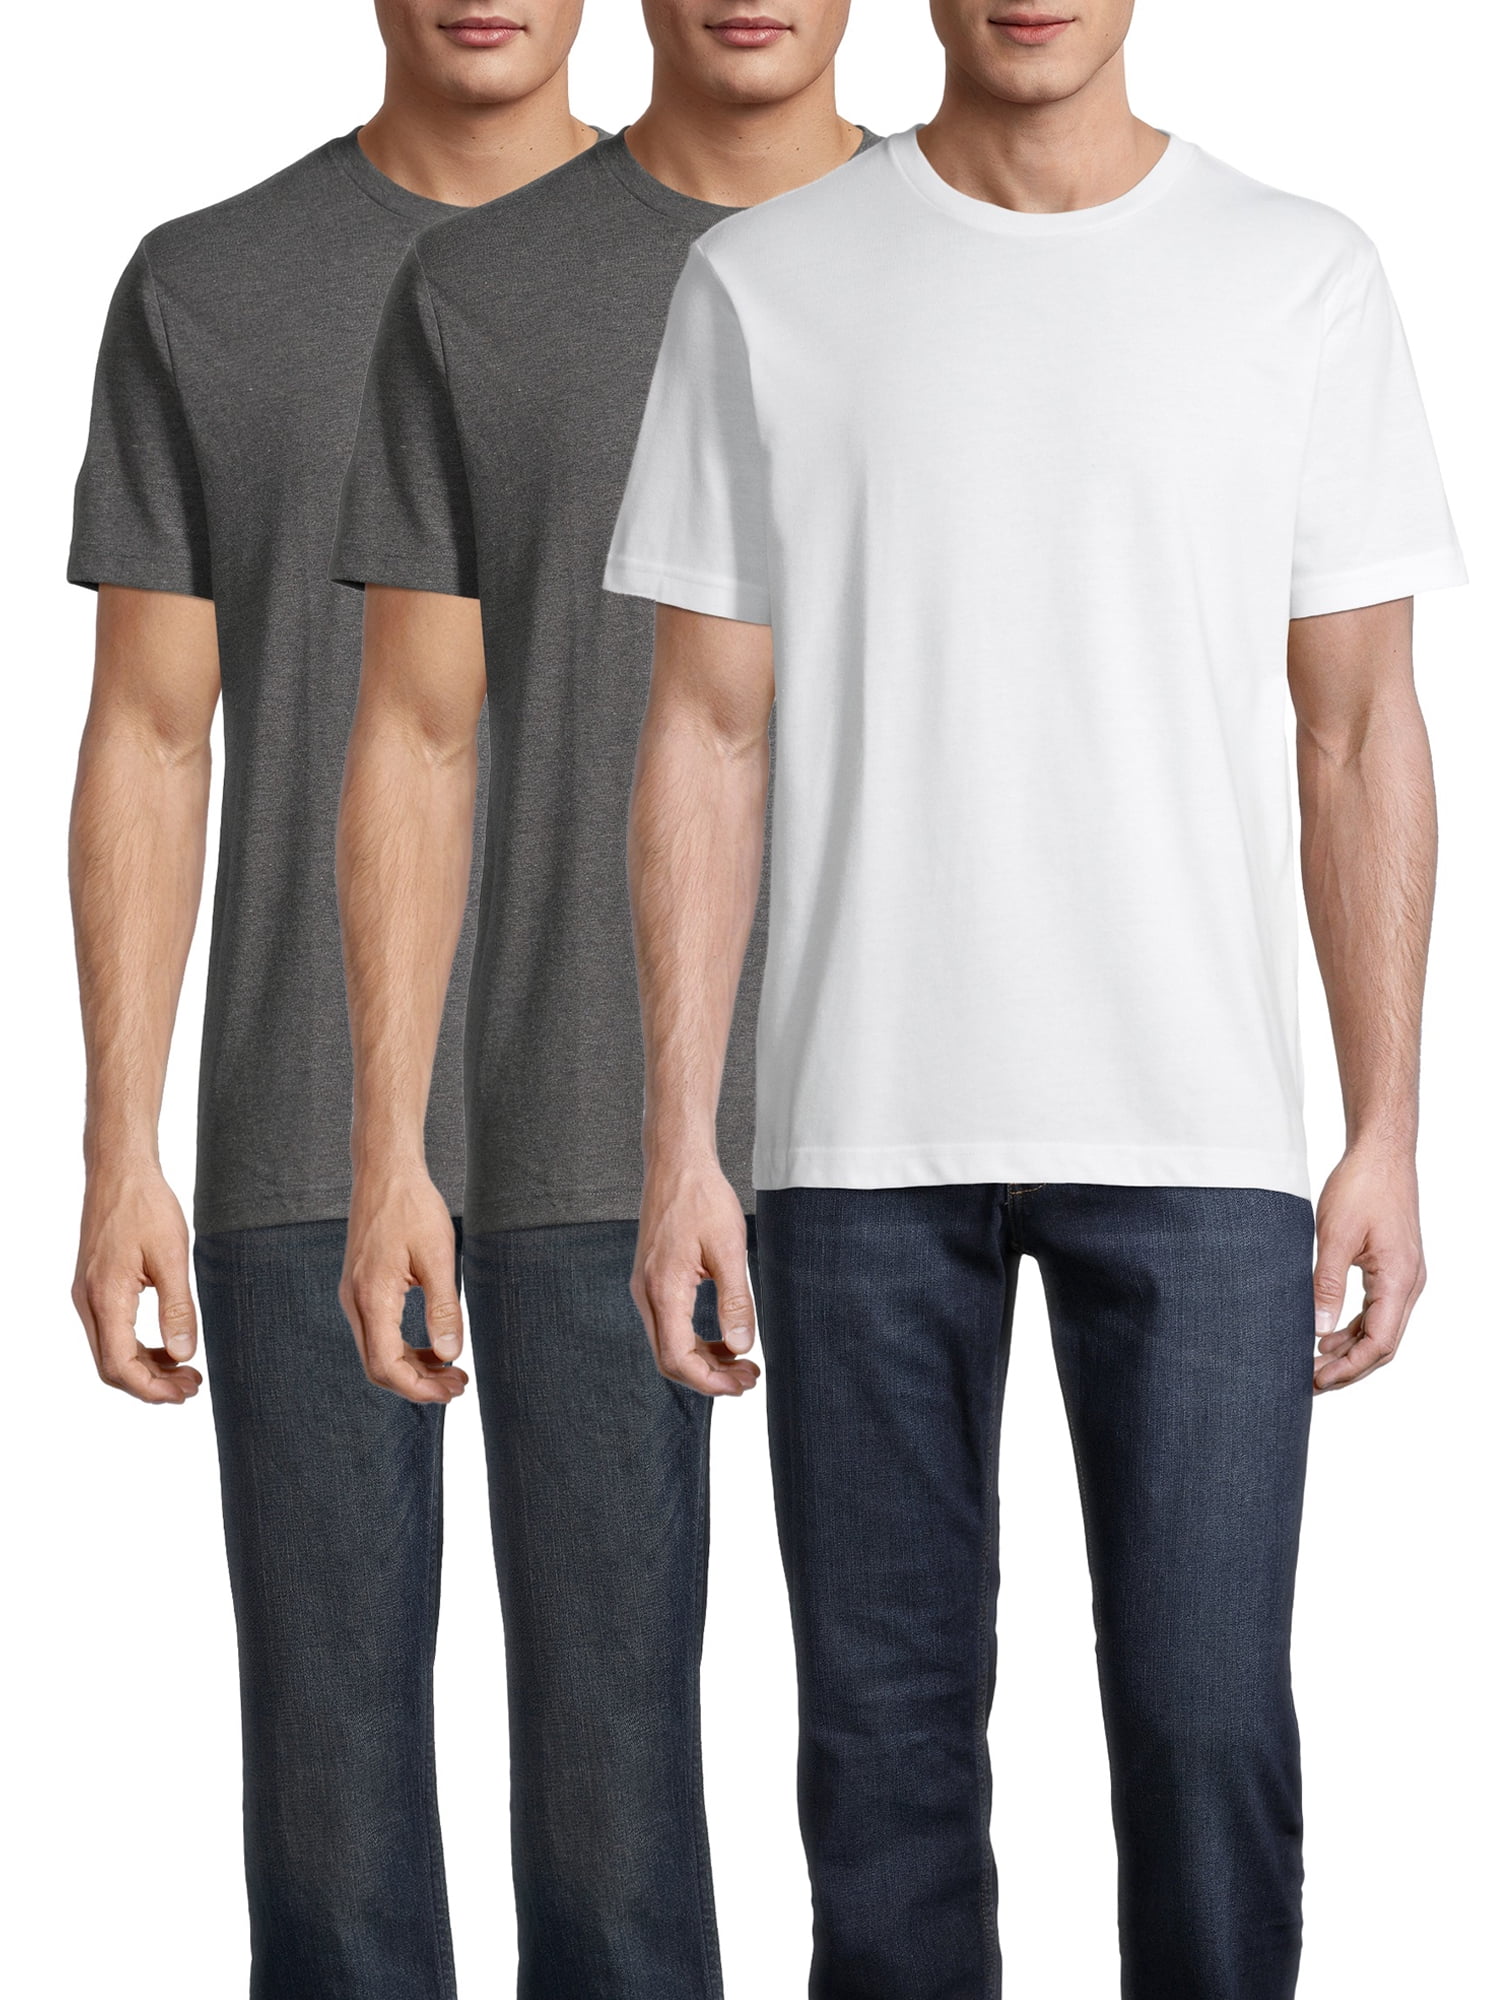 Old Navy Men's Go-Dry Crew-Neck T-shirts 3-Pack - Multi - Size XXXL